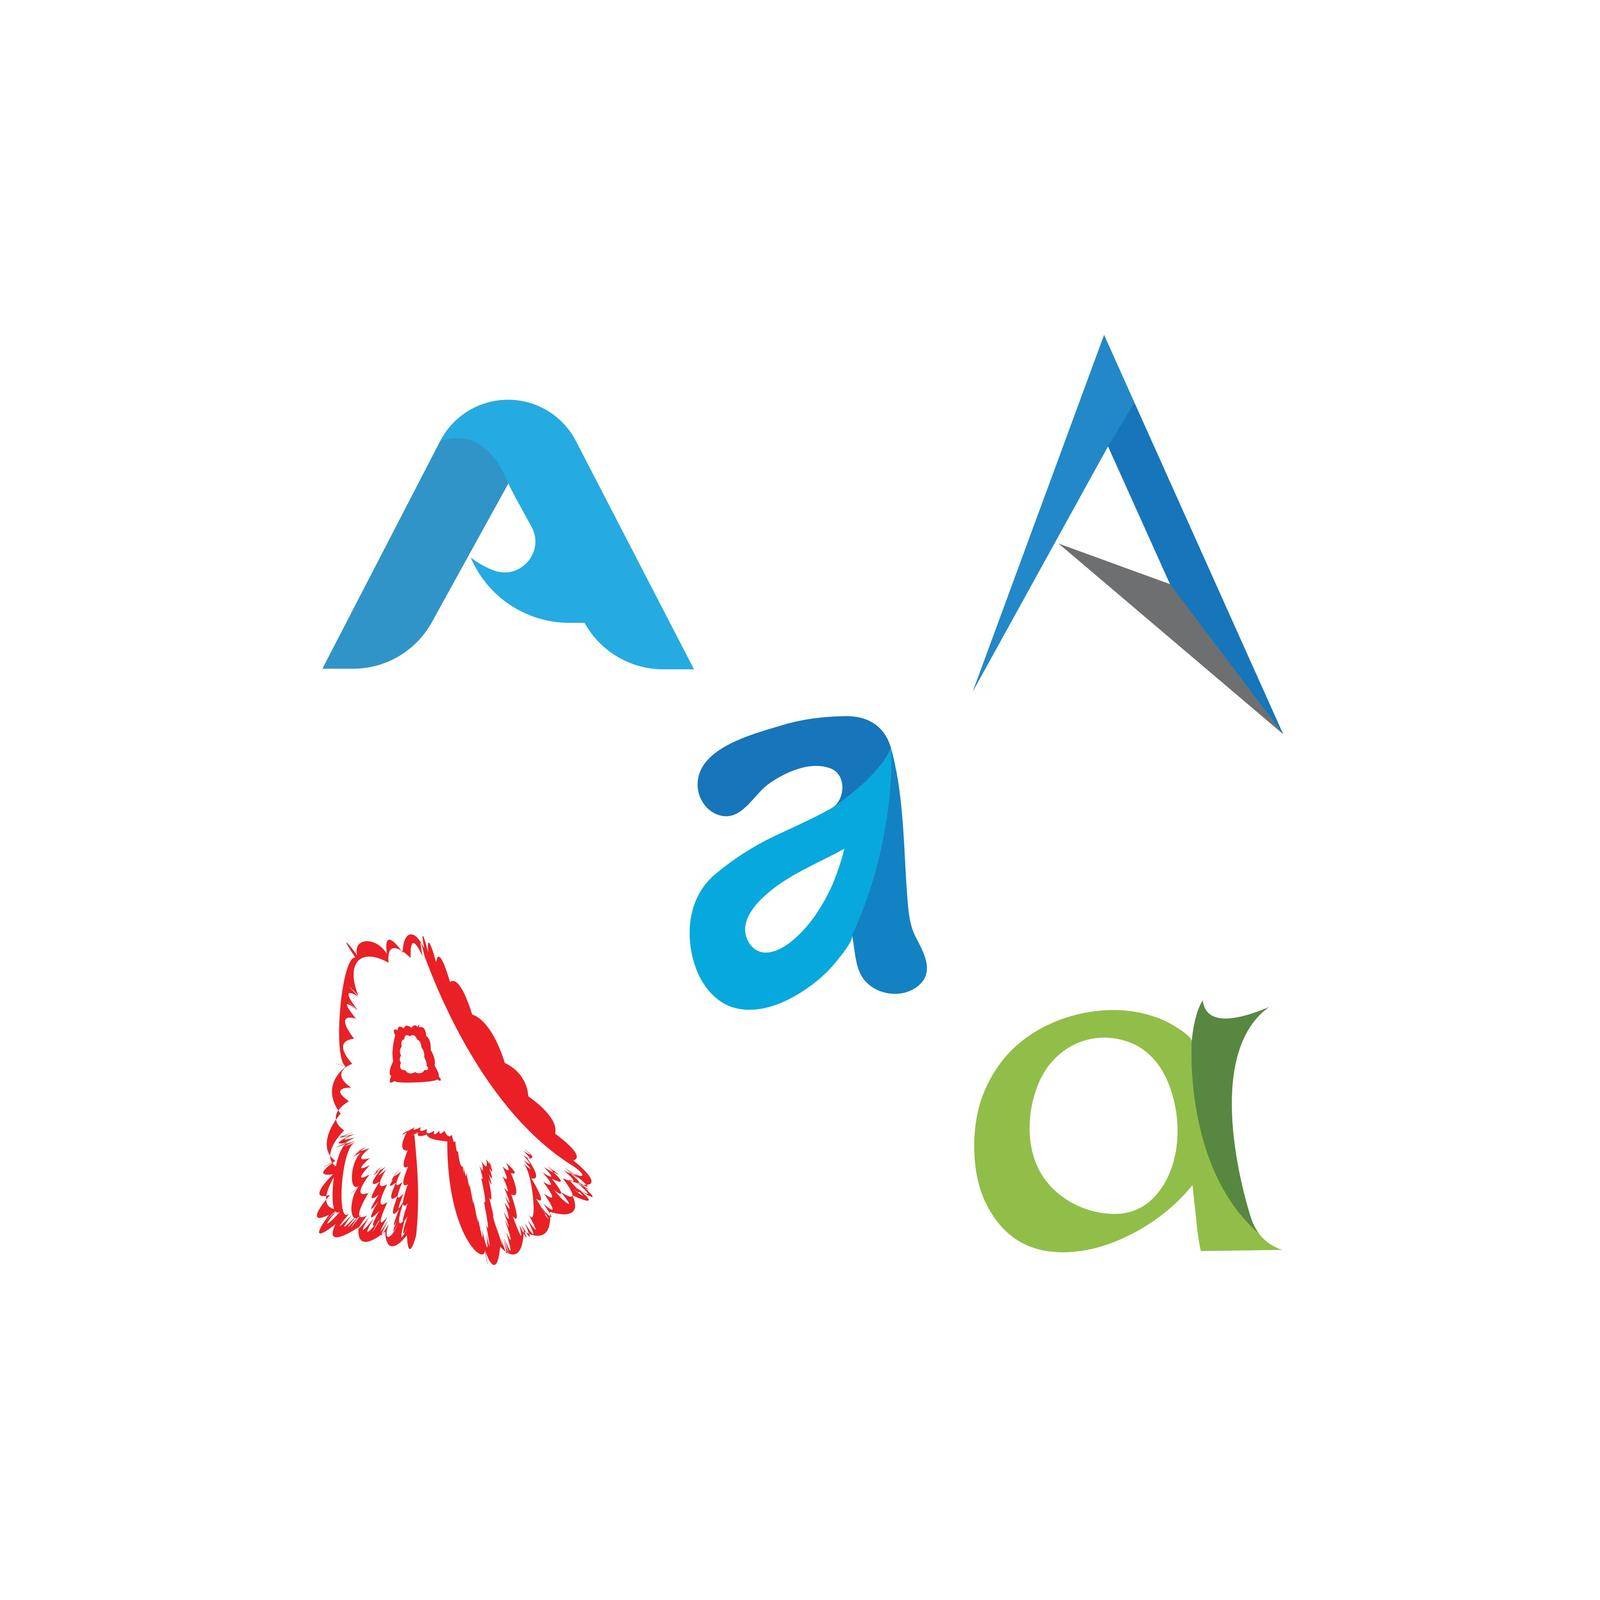 A Letter Alphabet font logo vector design